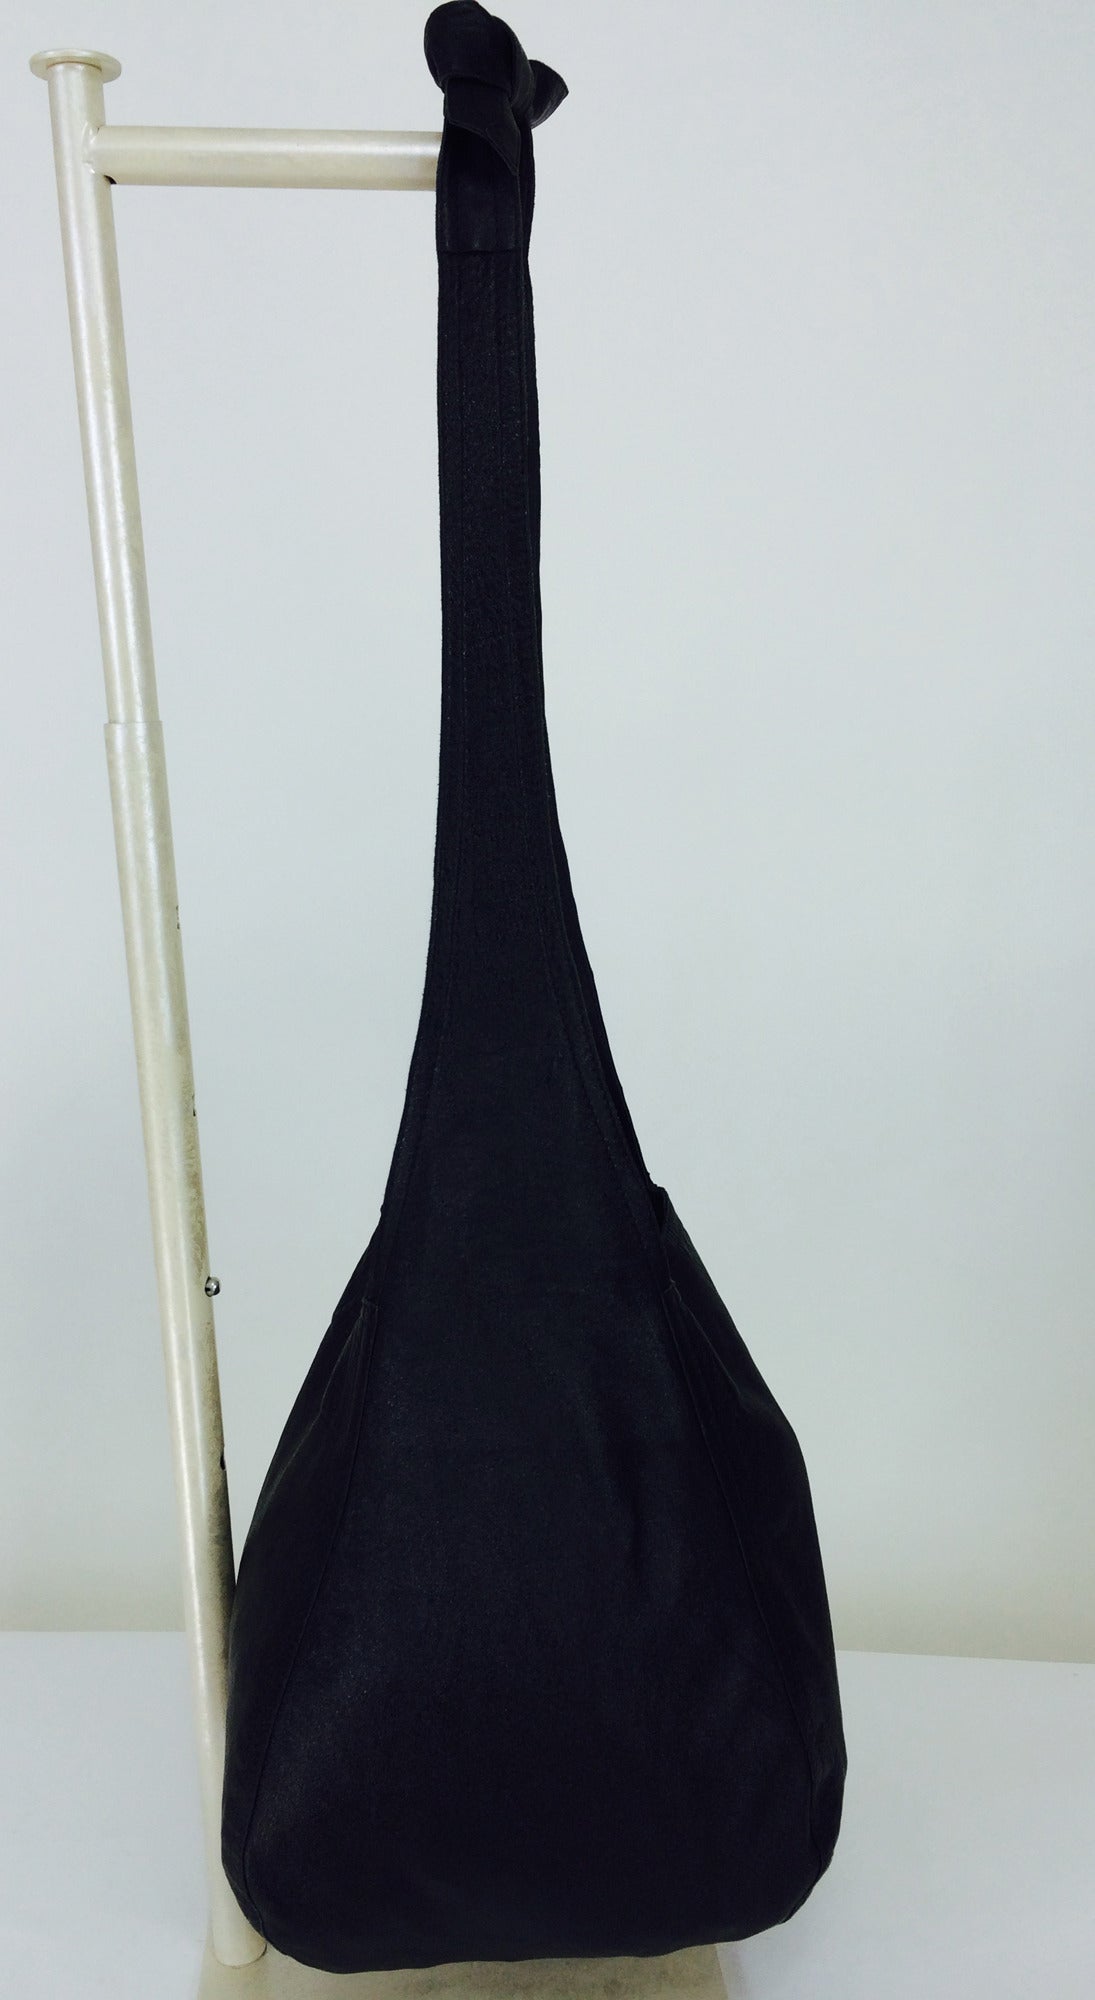 Halston black soft leather shoulder bag cover feature WWD Nov. 4, 1974 1